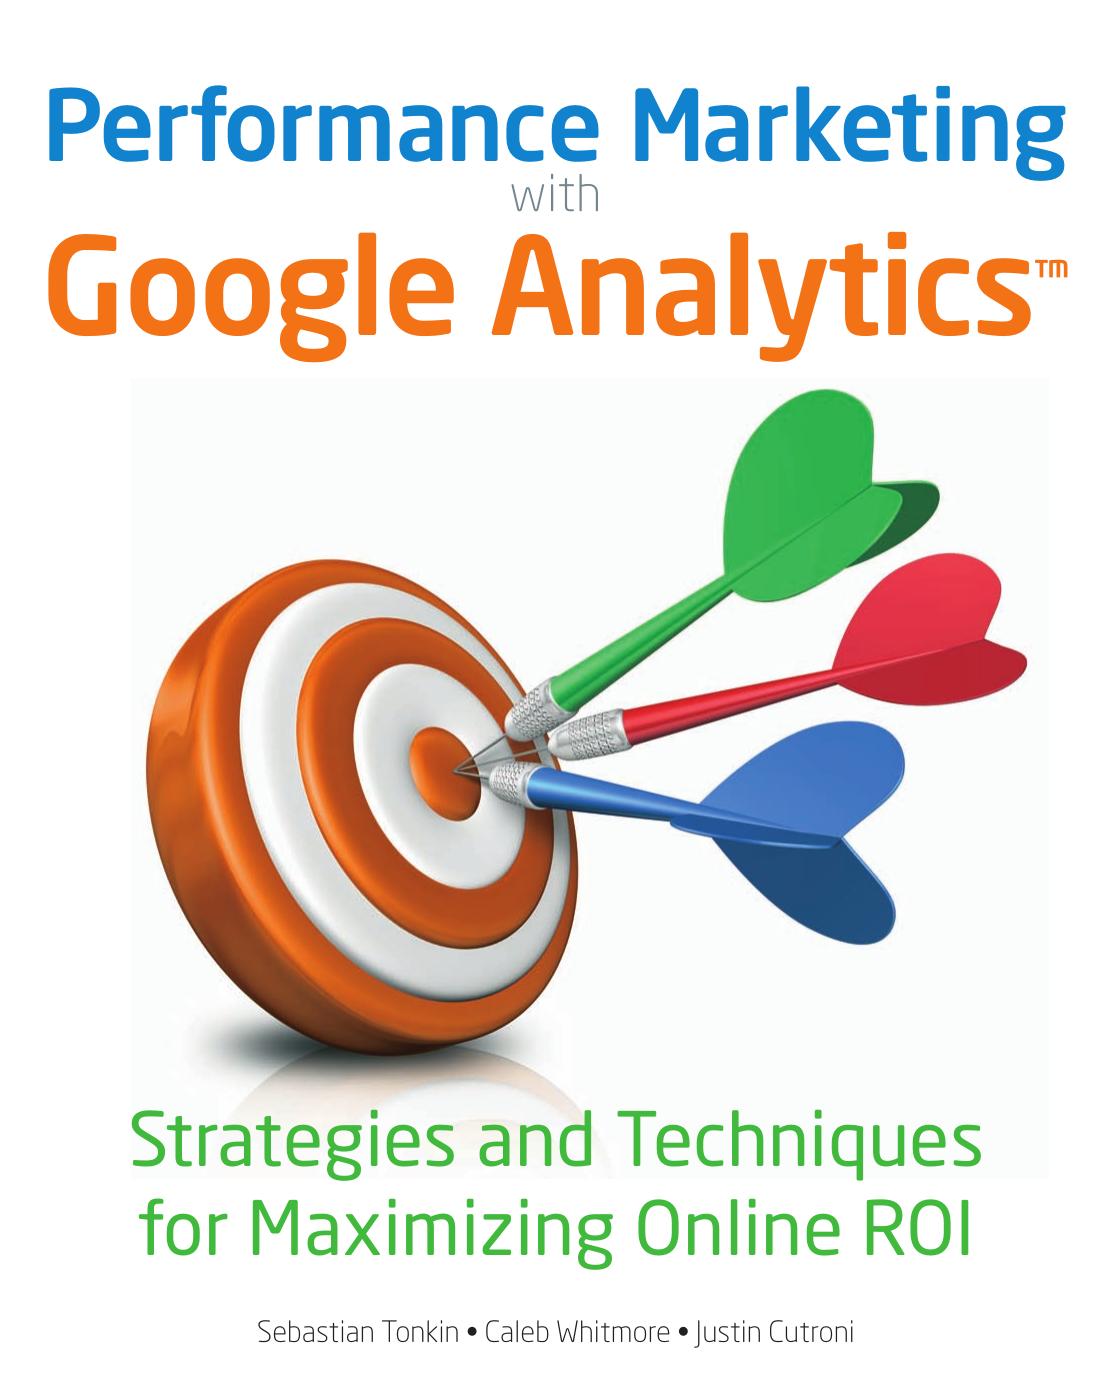 Sebastian Tonkin, Caleb Whitmore, Justin Cutroni Performance Marketing with Google Analytics Strategies and Techniques for Maximizing Online ROI 2010